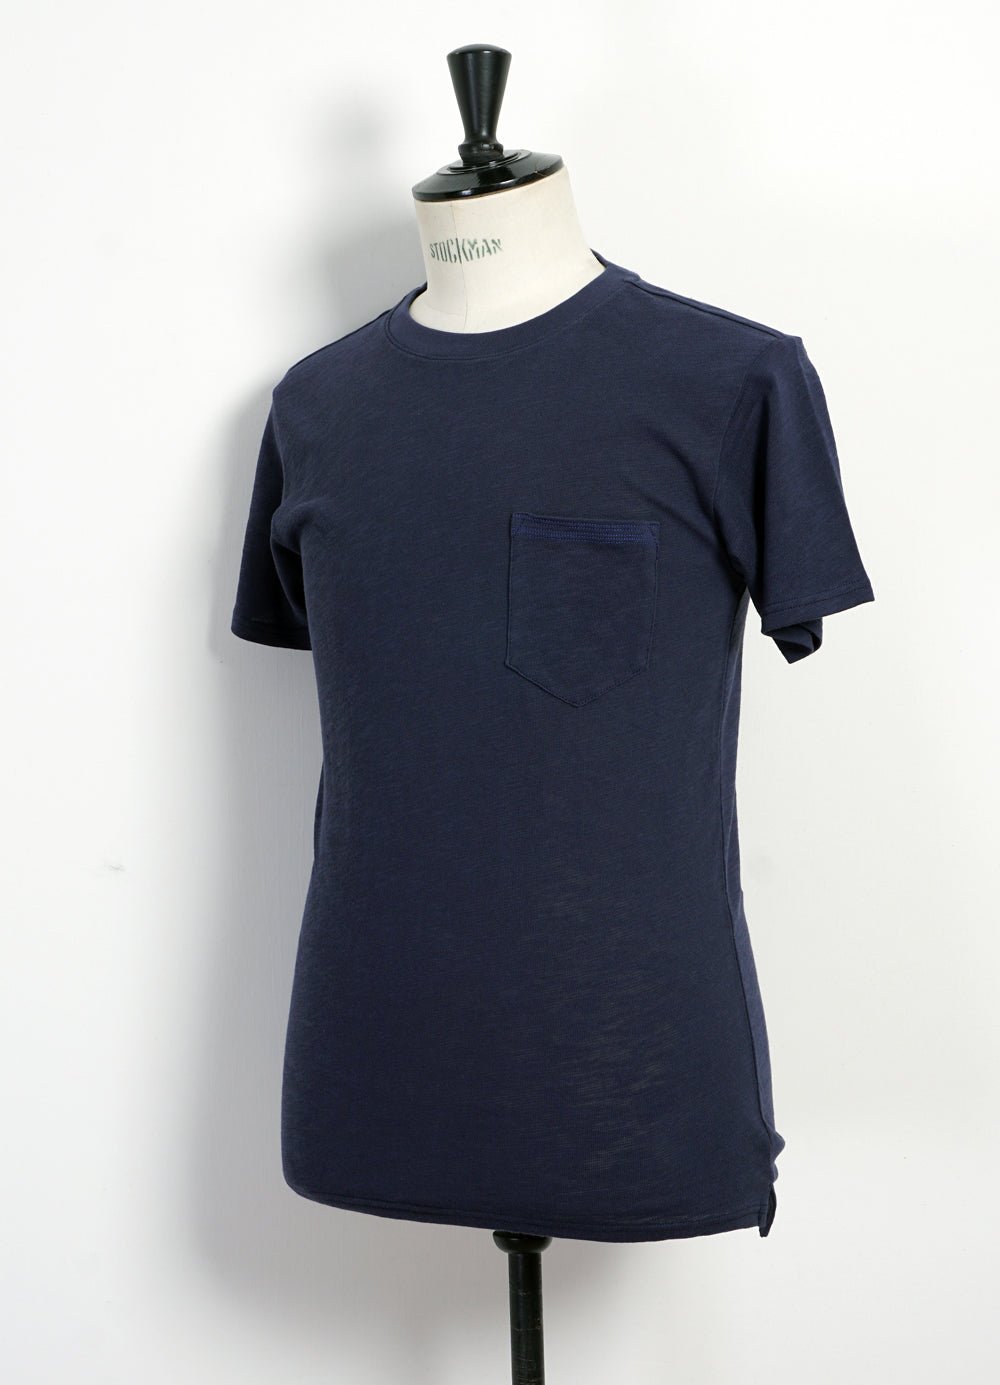 HANSEN GARMENTS - JAMES | Crew Neck Pocket T | Blue - HANSEN Garments